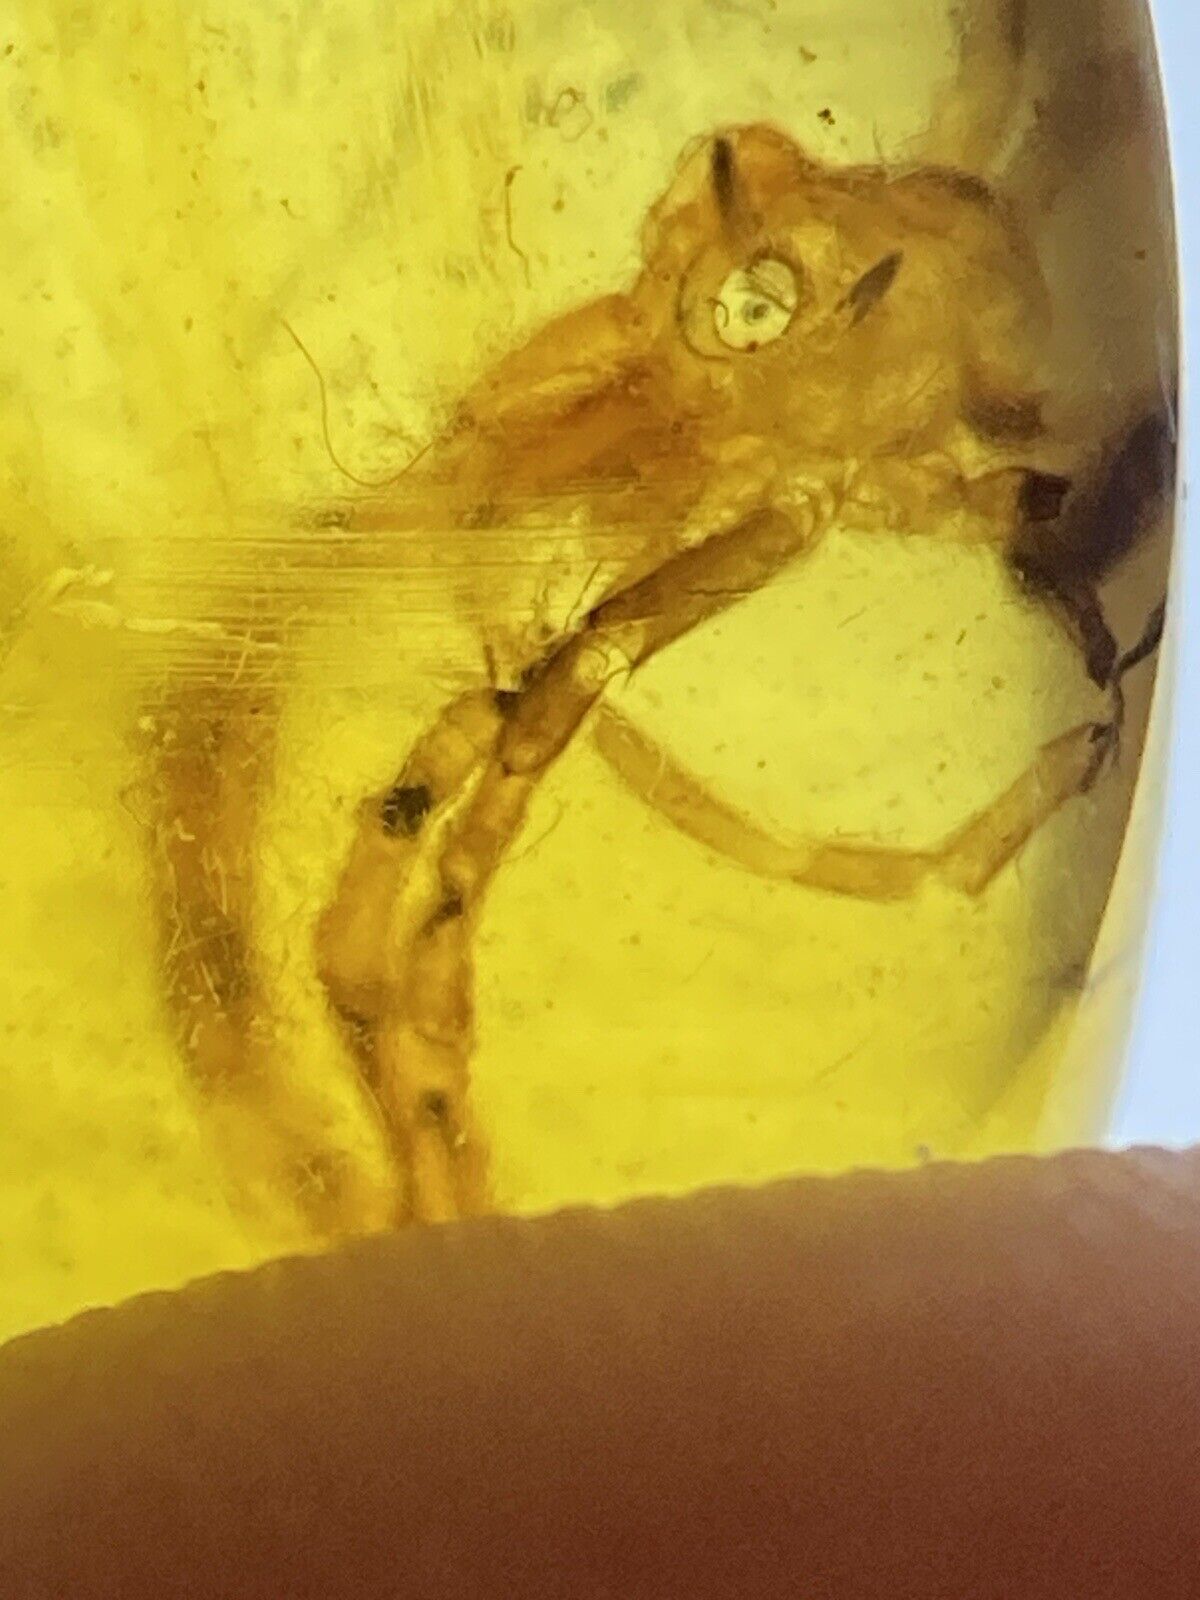 HUGE PERFECT Spider Fossil, Arachnid Inclusion, In Genuine Burmite Amber, 98myo